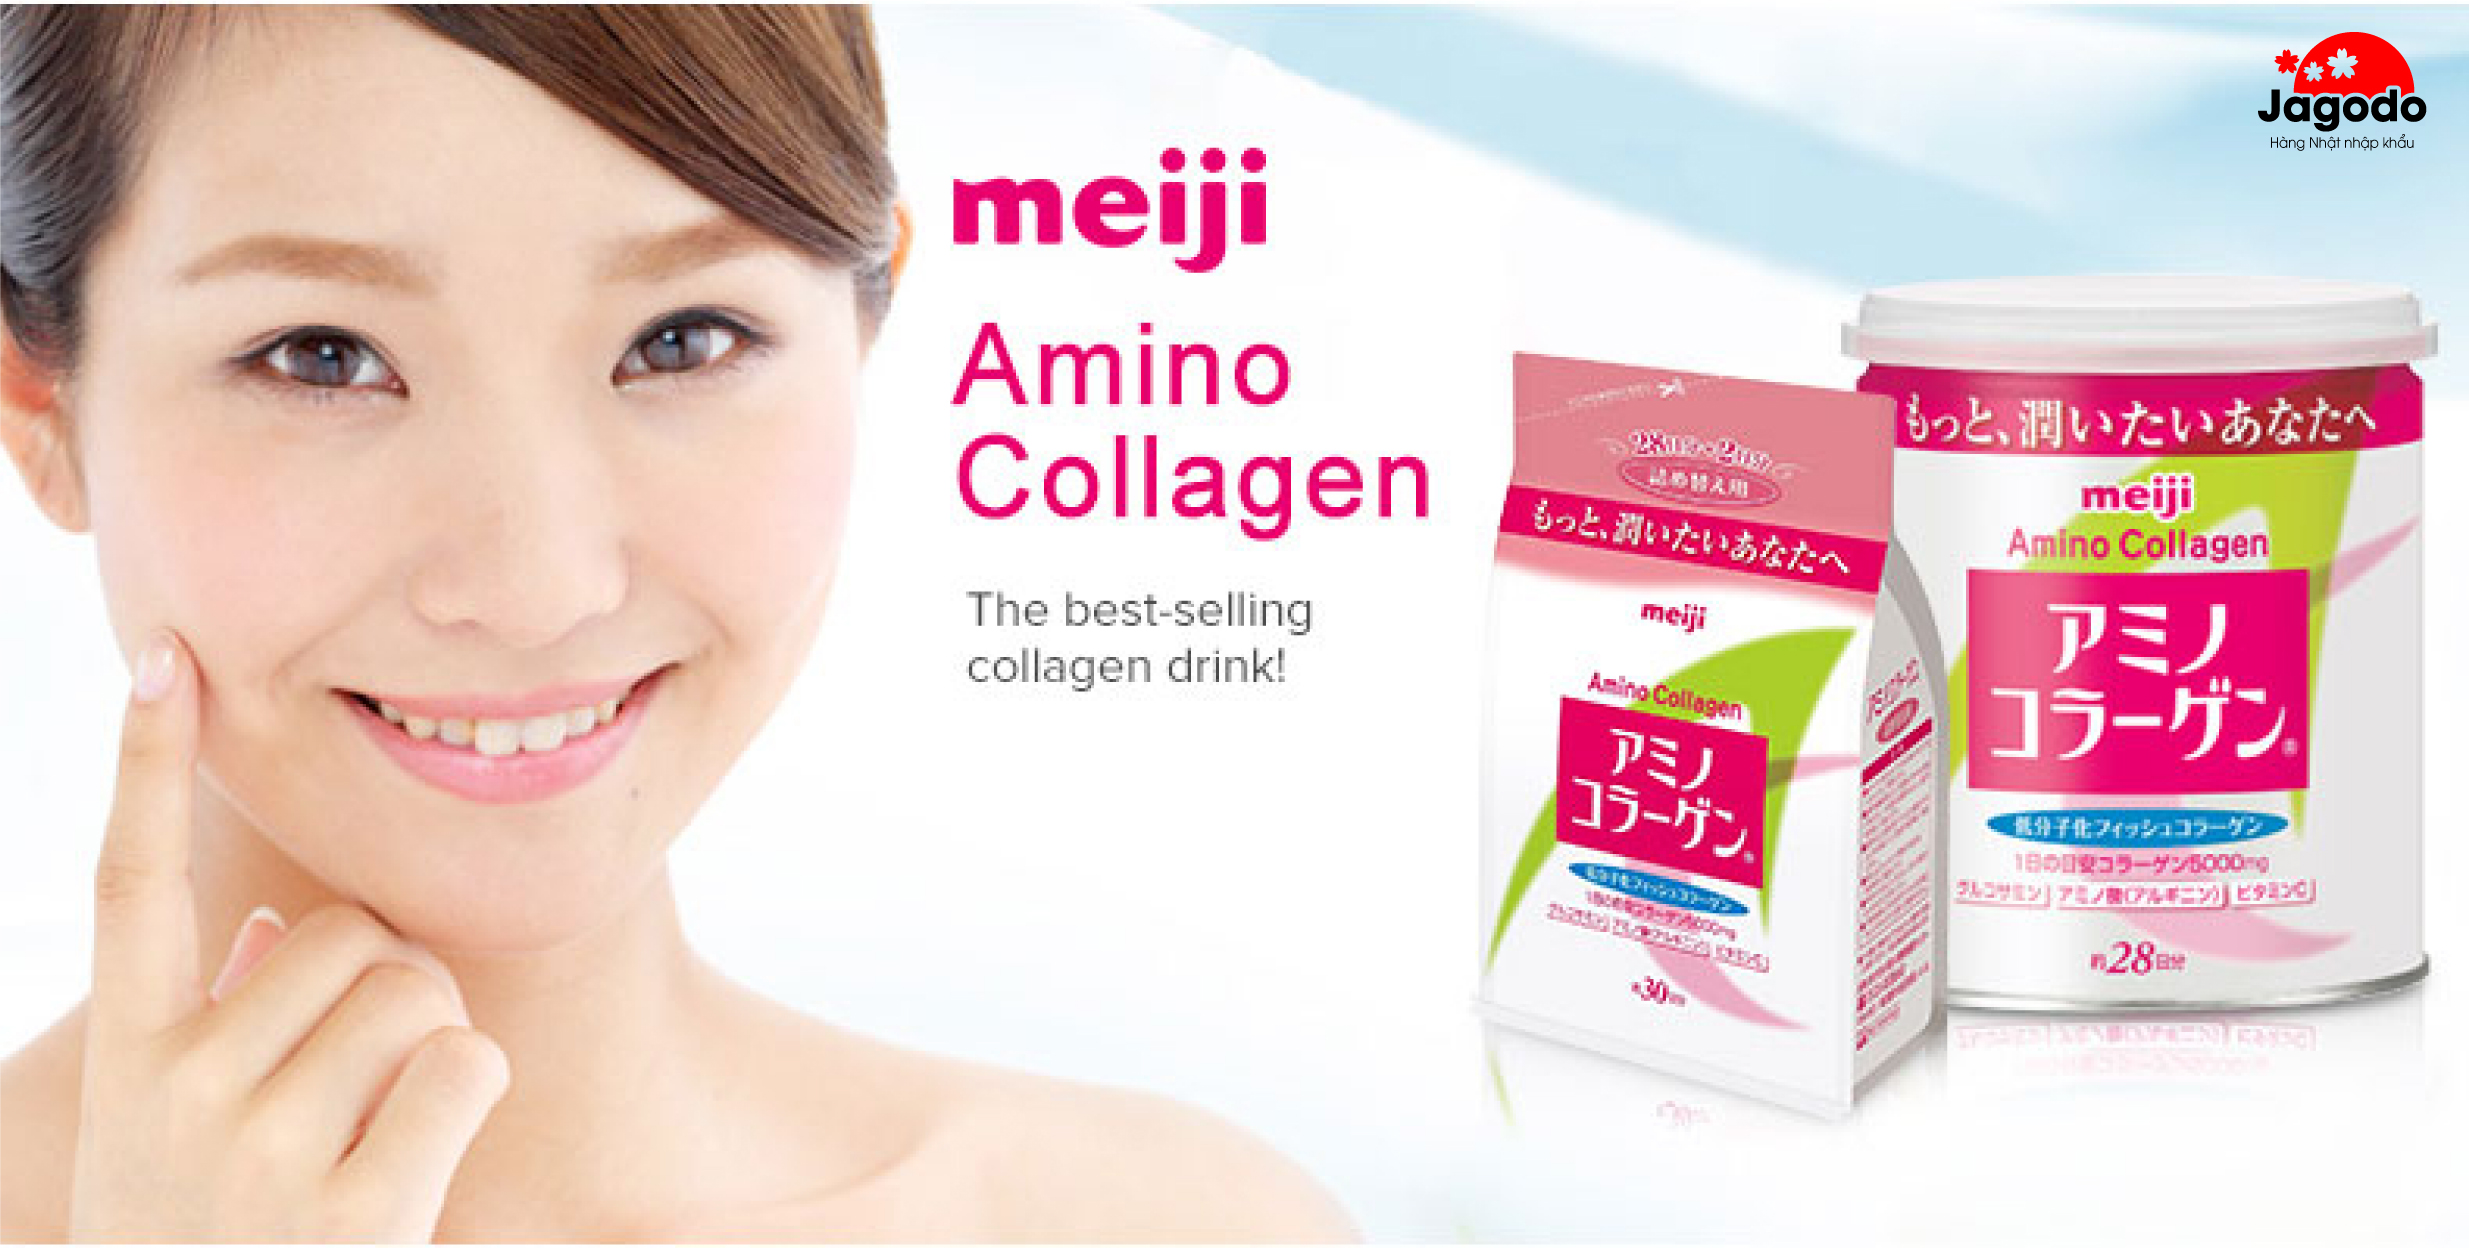 c3a06974 2d2fda99 meiji collagen banner - Bột collagen Meiji Amino 214g - Dạng túi